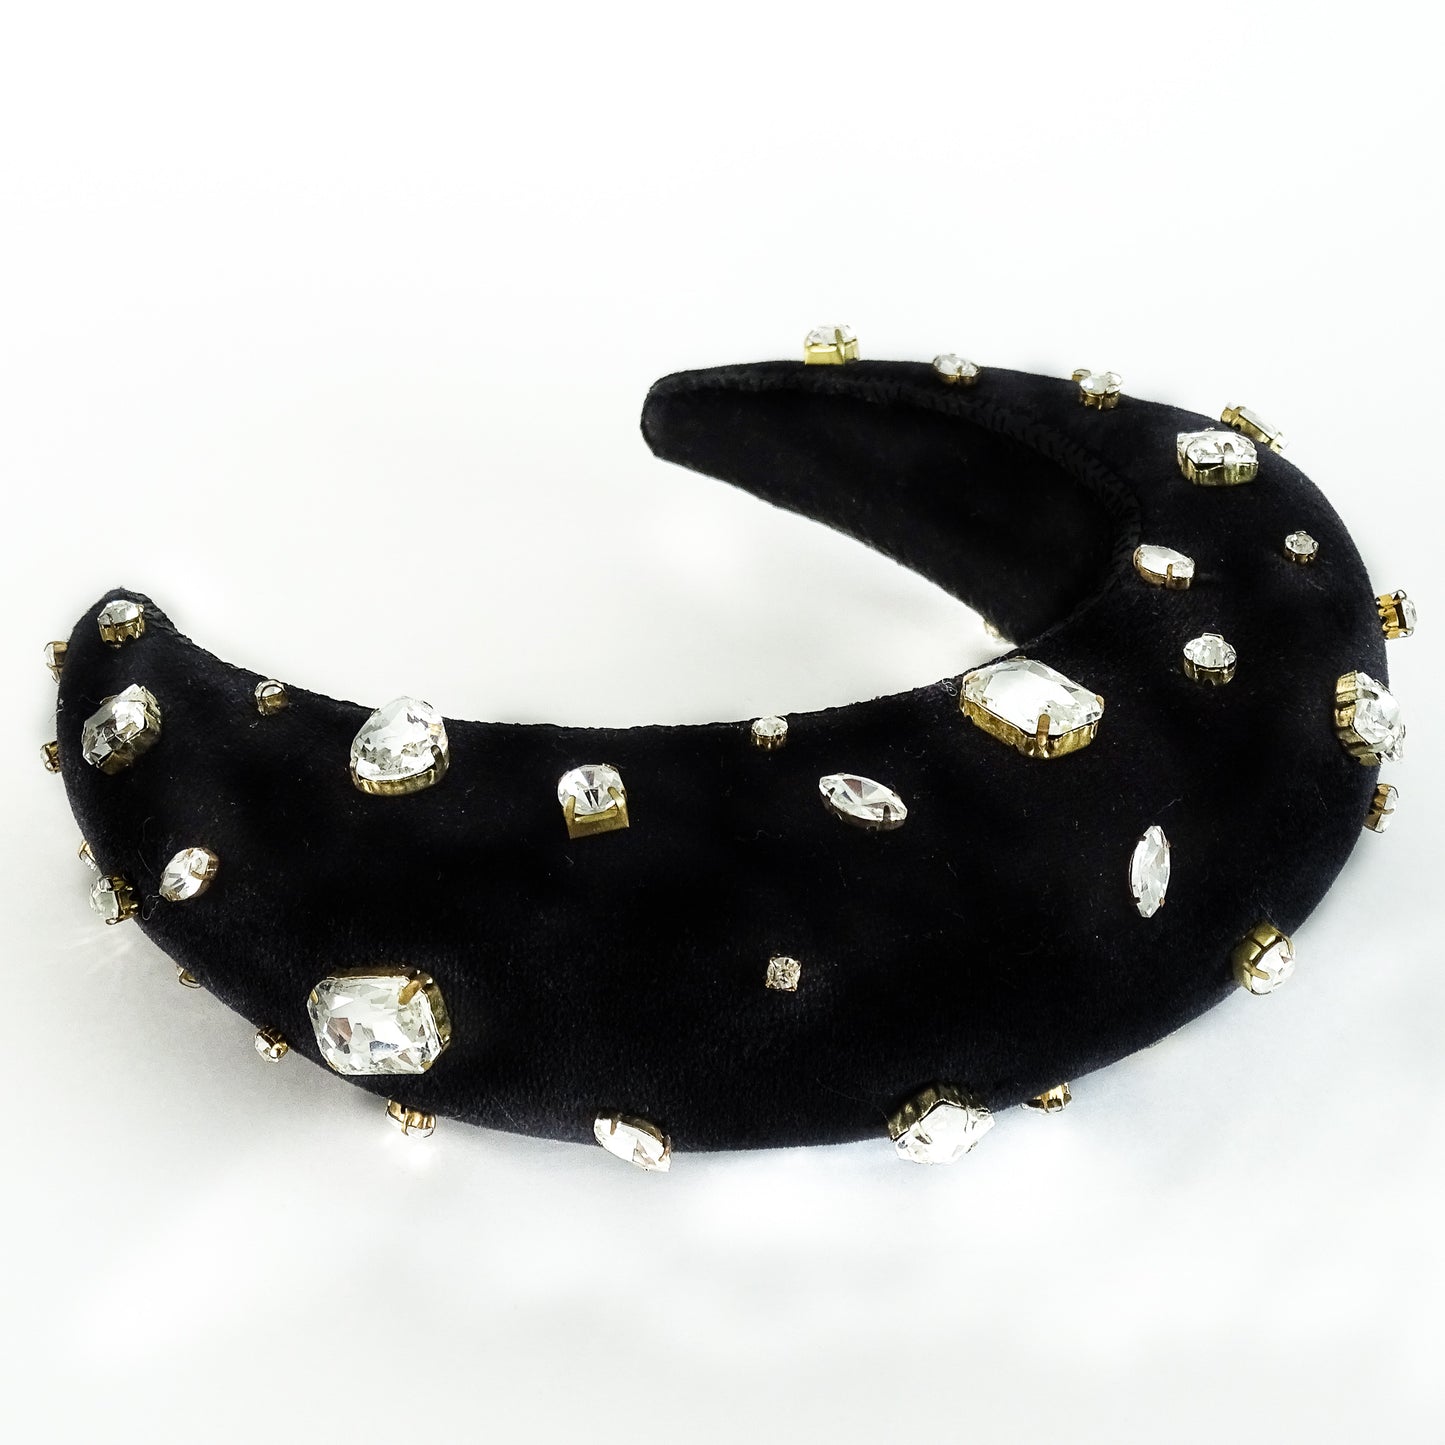 The Black Diamond Headband